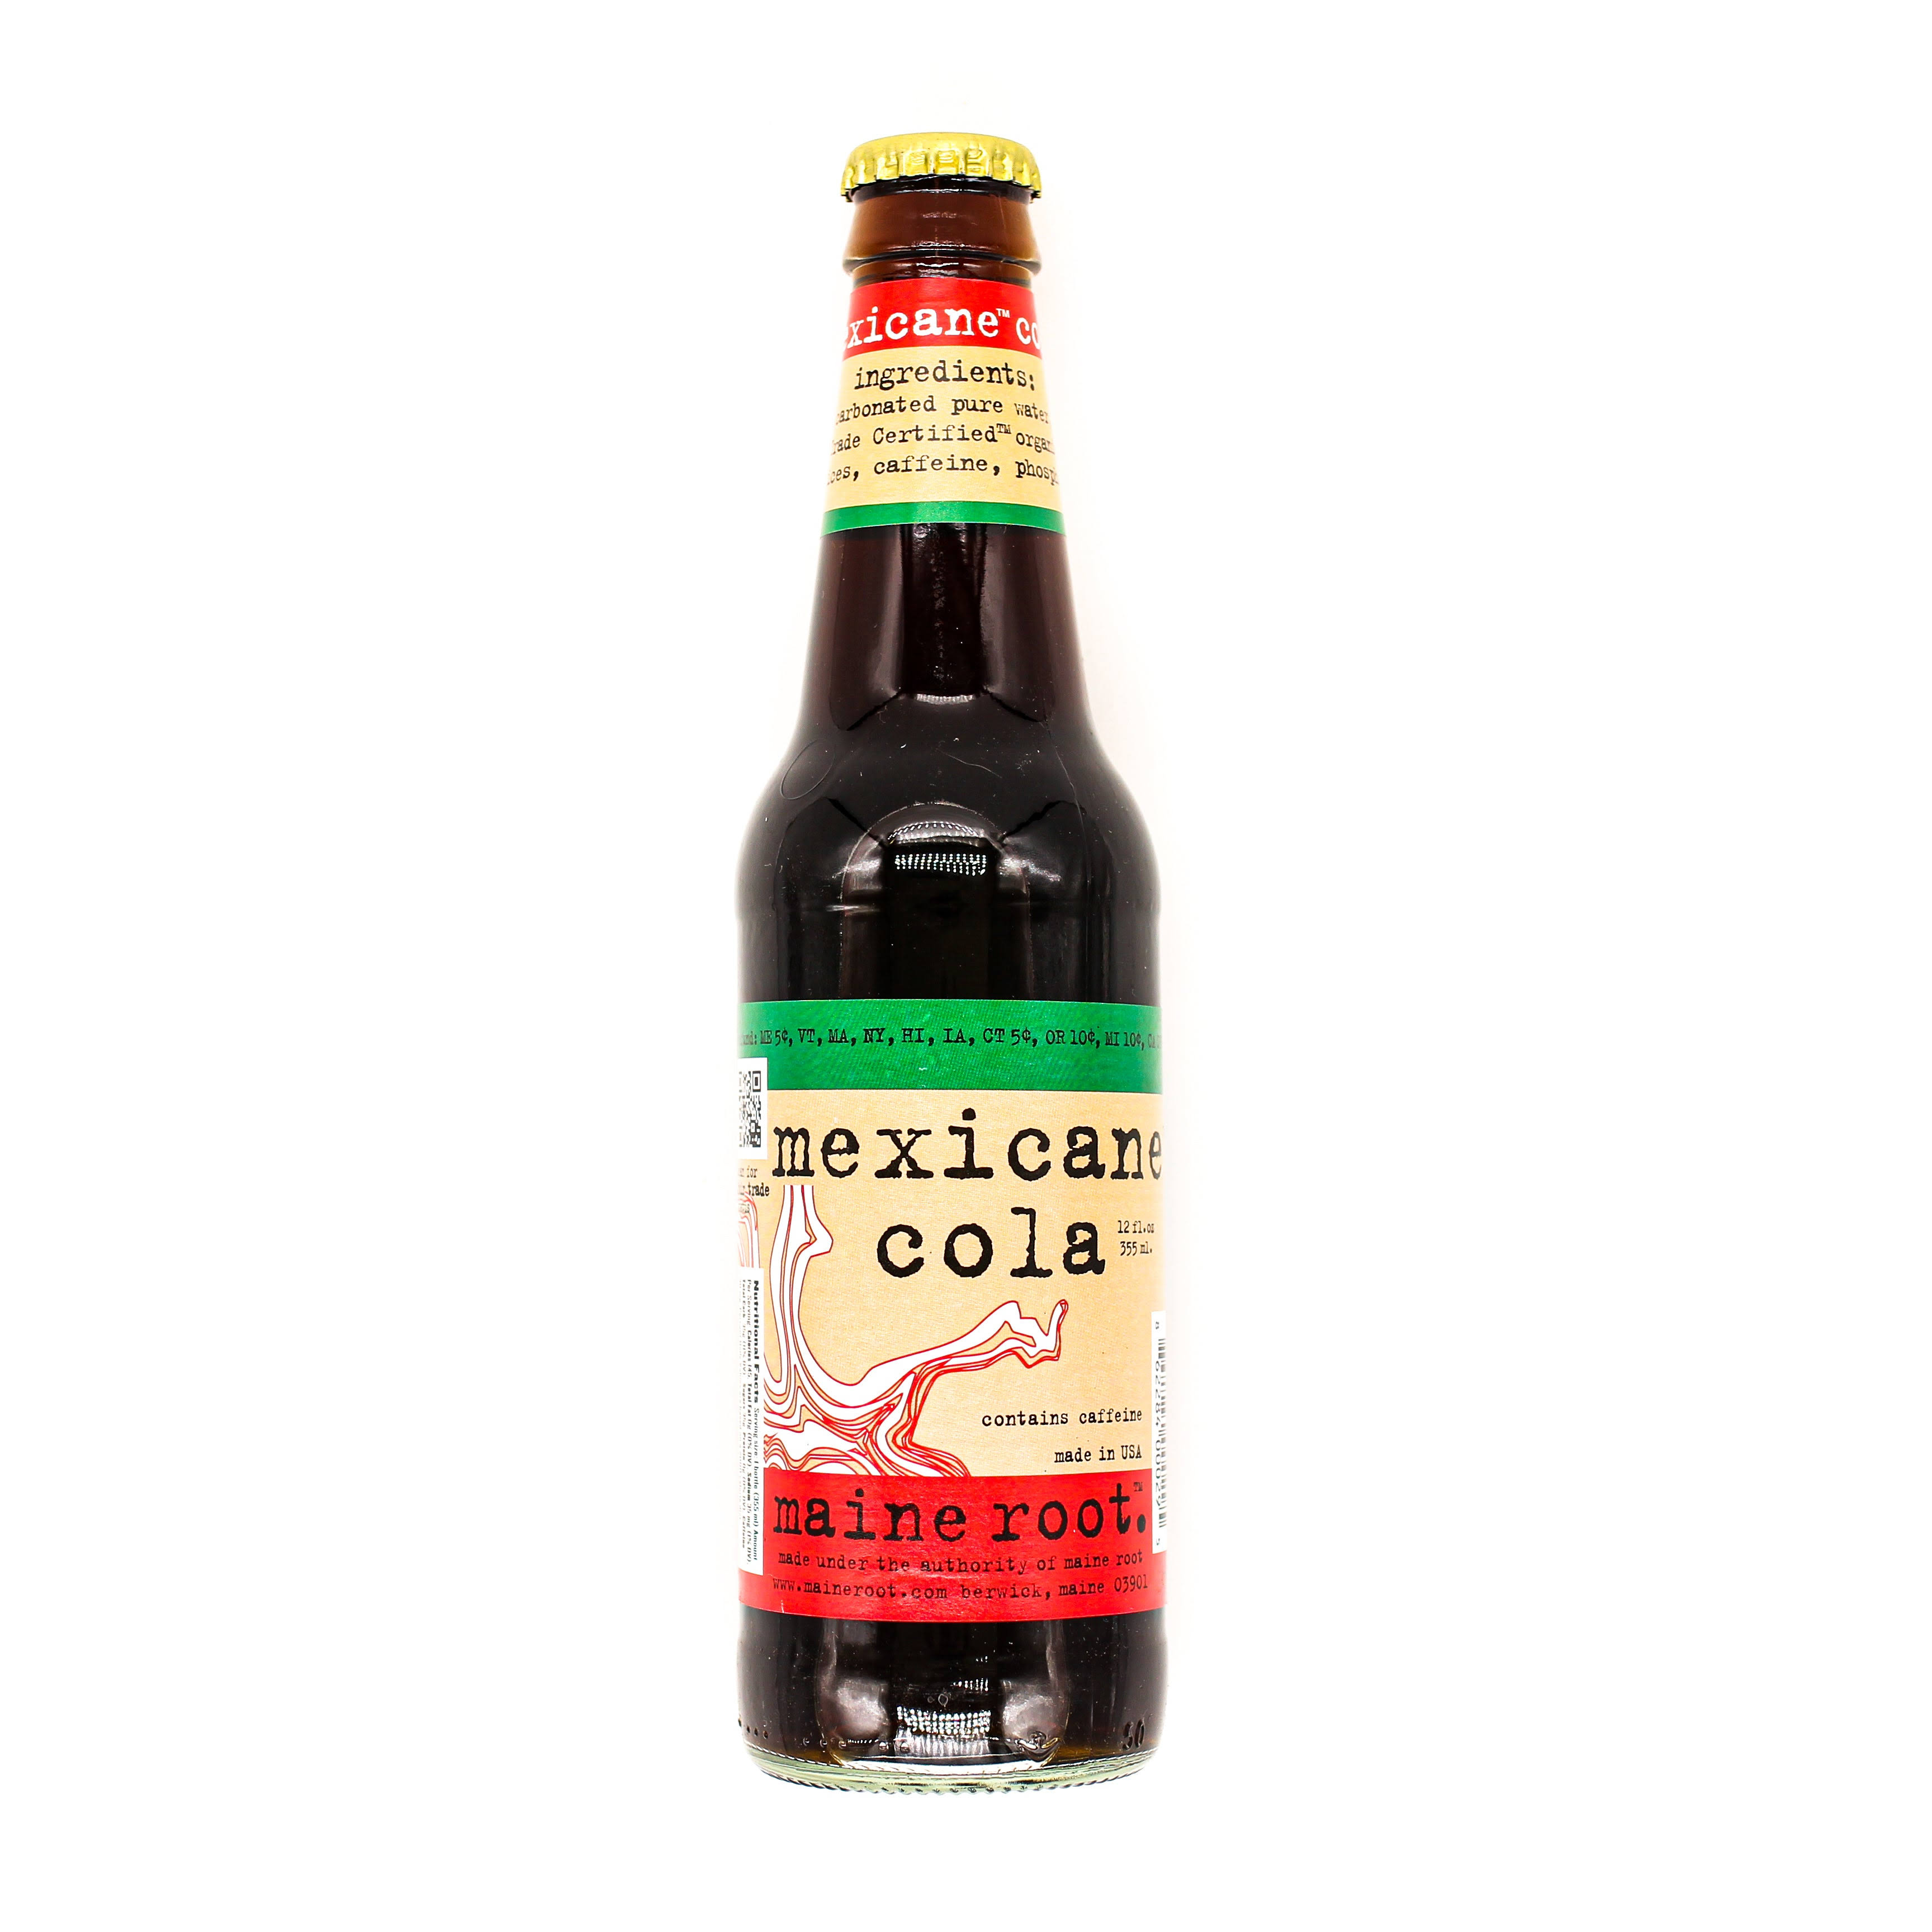 Maine Root Mexican Cola - 12 fl oz bottle